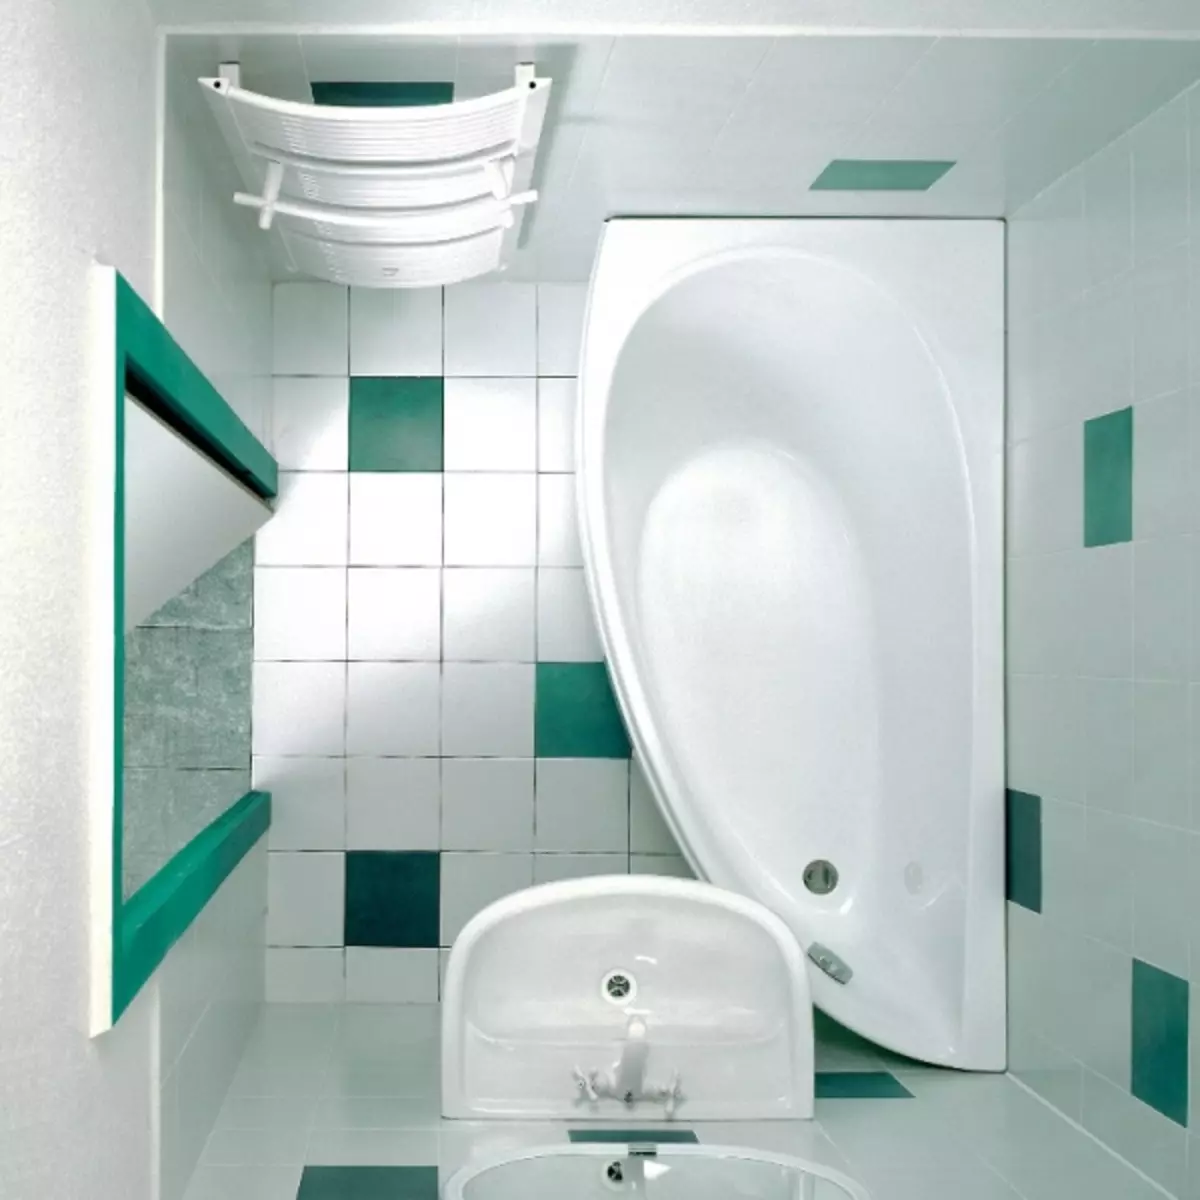 Lite badrumsdesign: Lös problemet kompetent